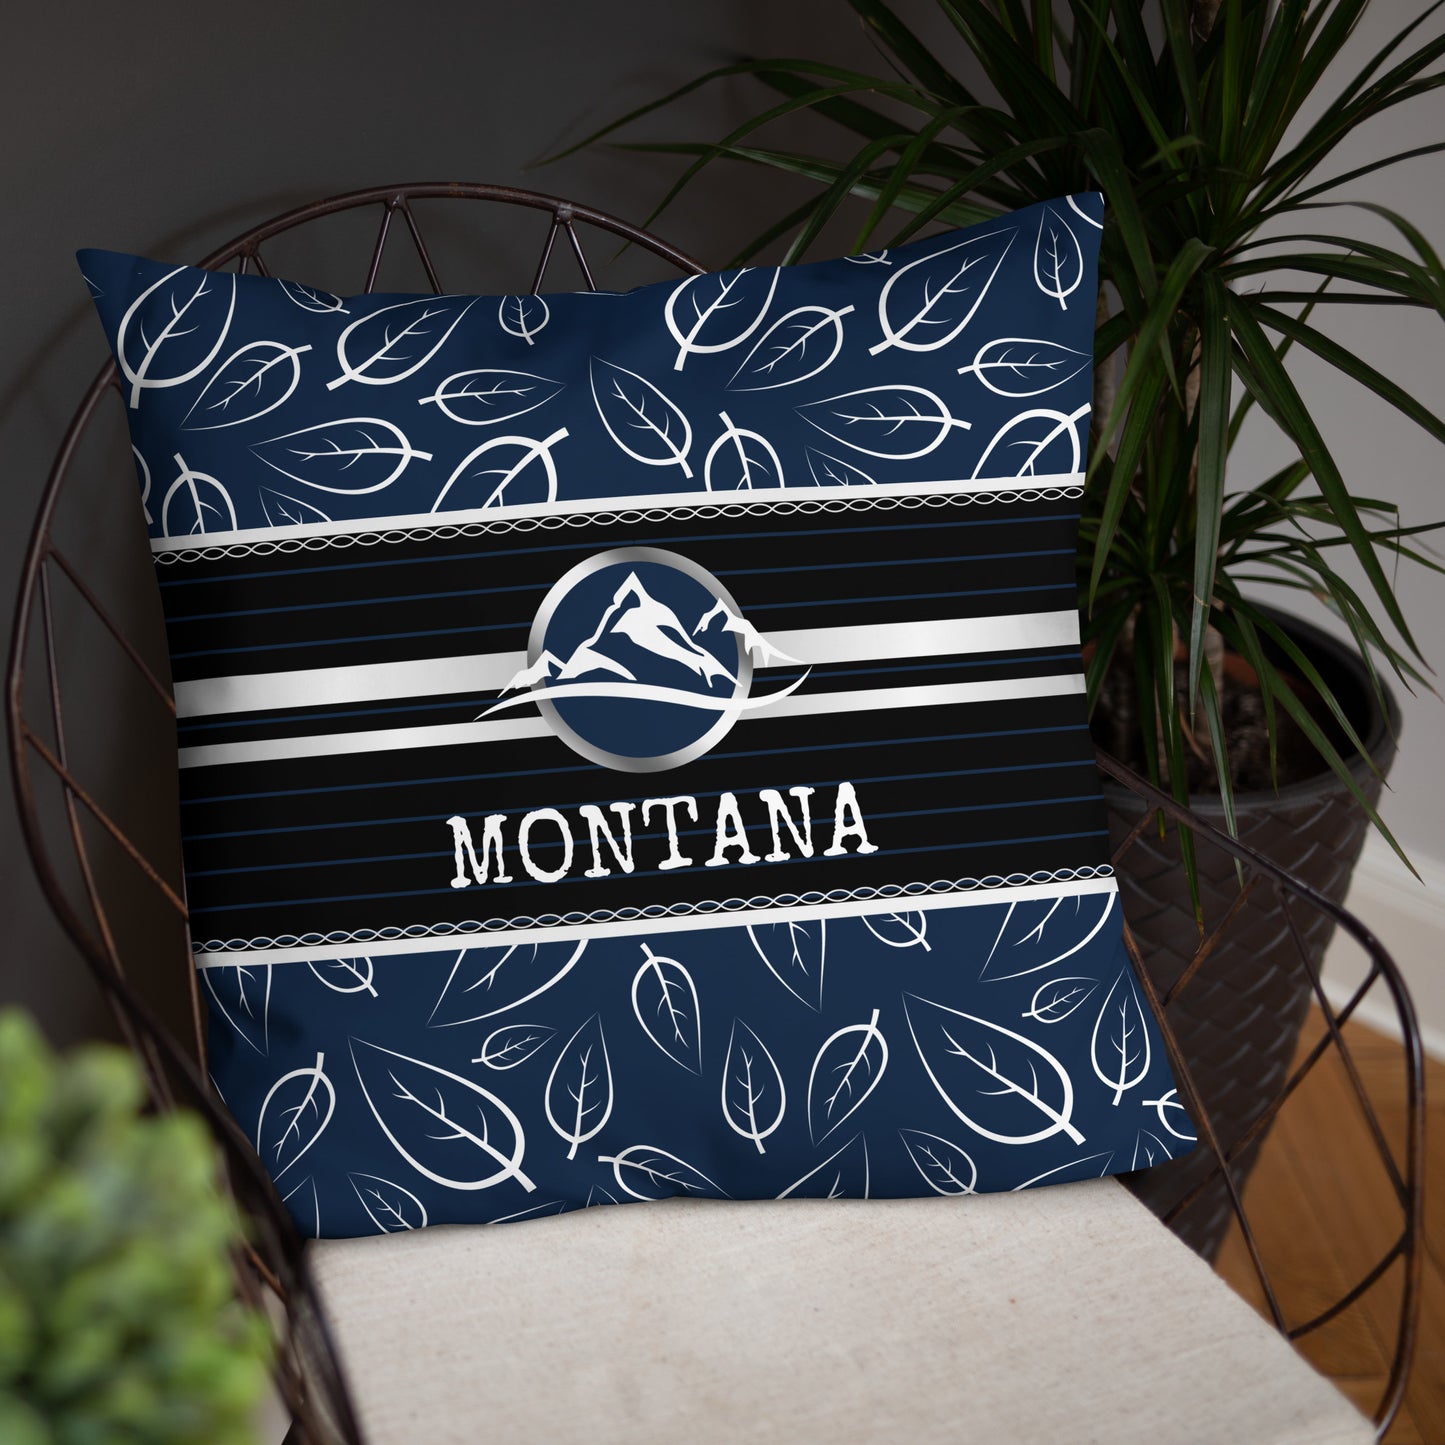 Montana Travel Gift | Montana Vacation Gift | Montana Travel Souvenir | Montana Vacation Memento | Montana Home Décor | Keepsake Souvenir Gift | Travel Vacation Gift | Montana United States Gift